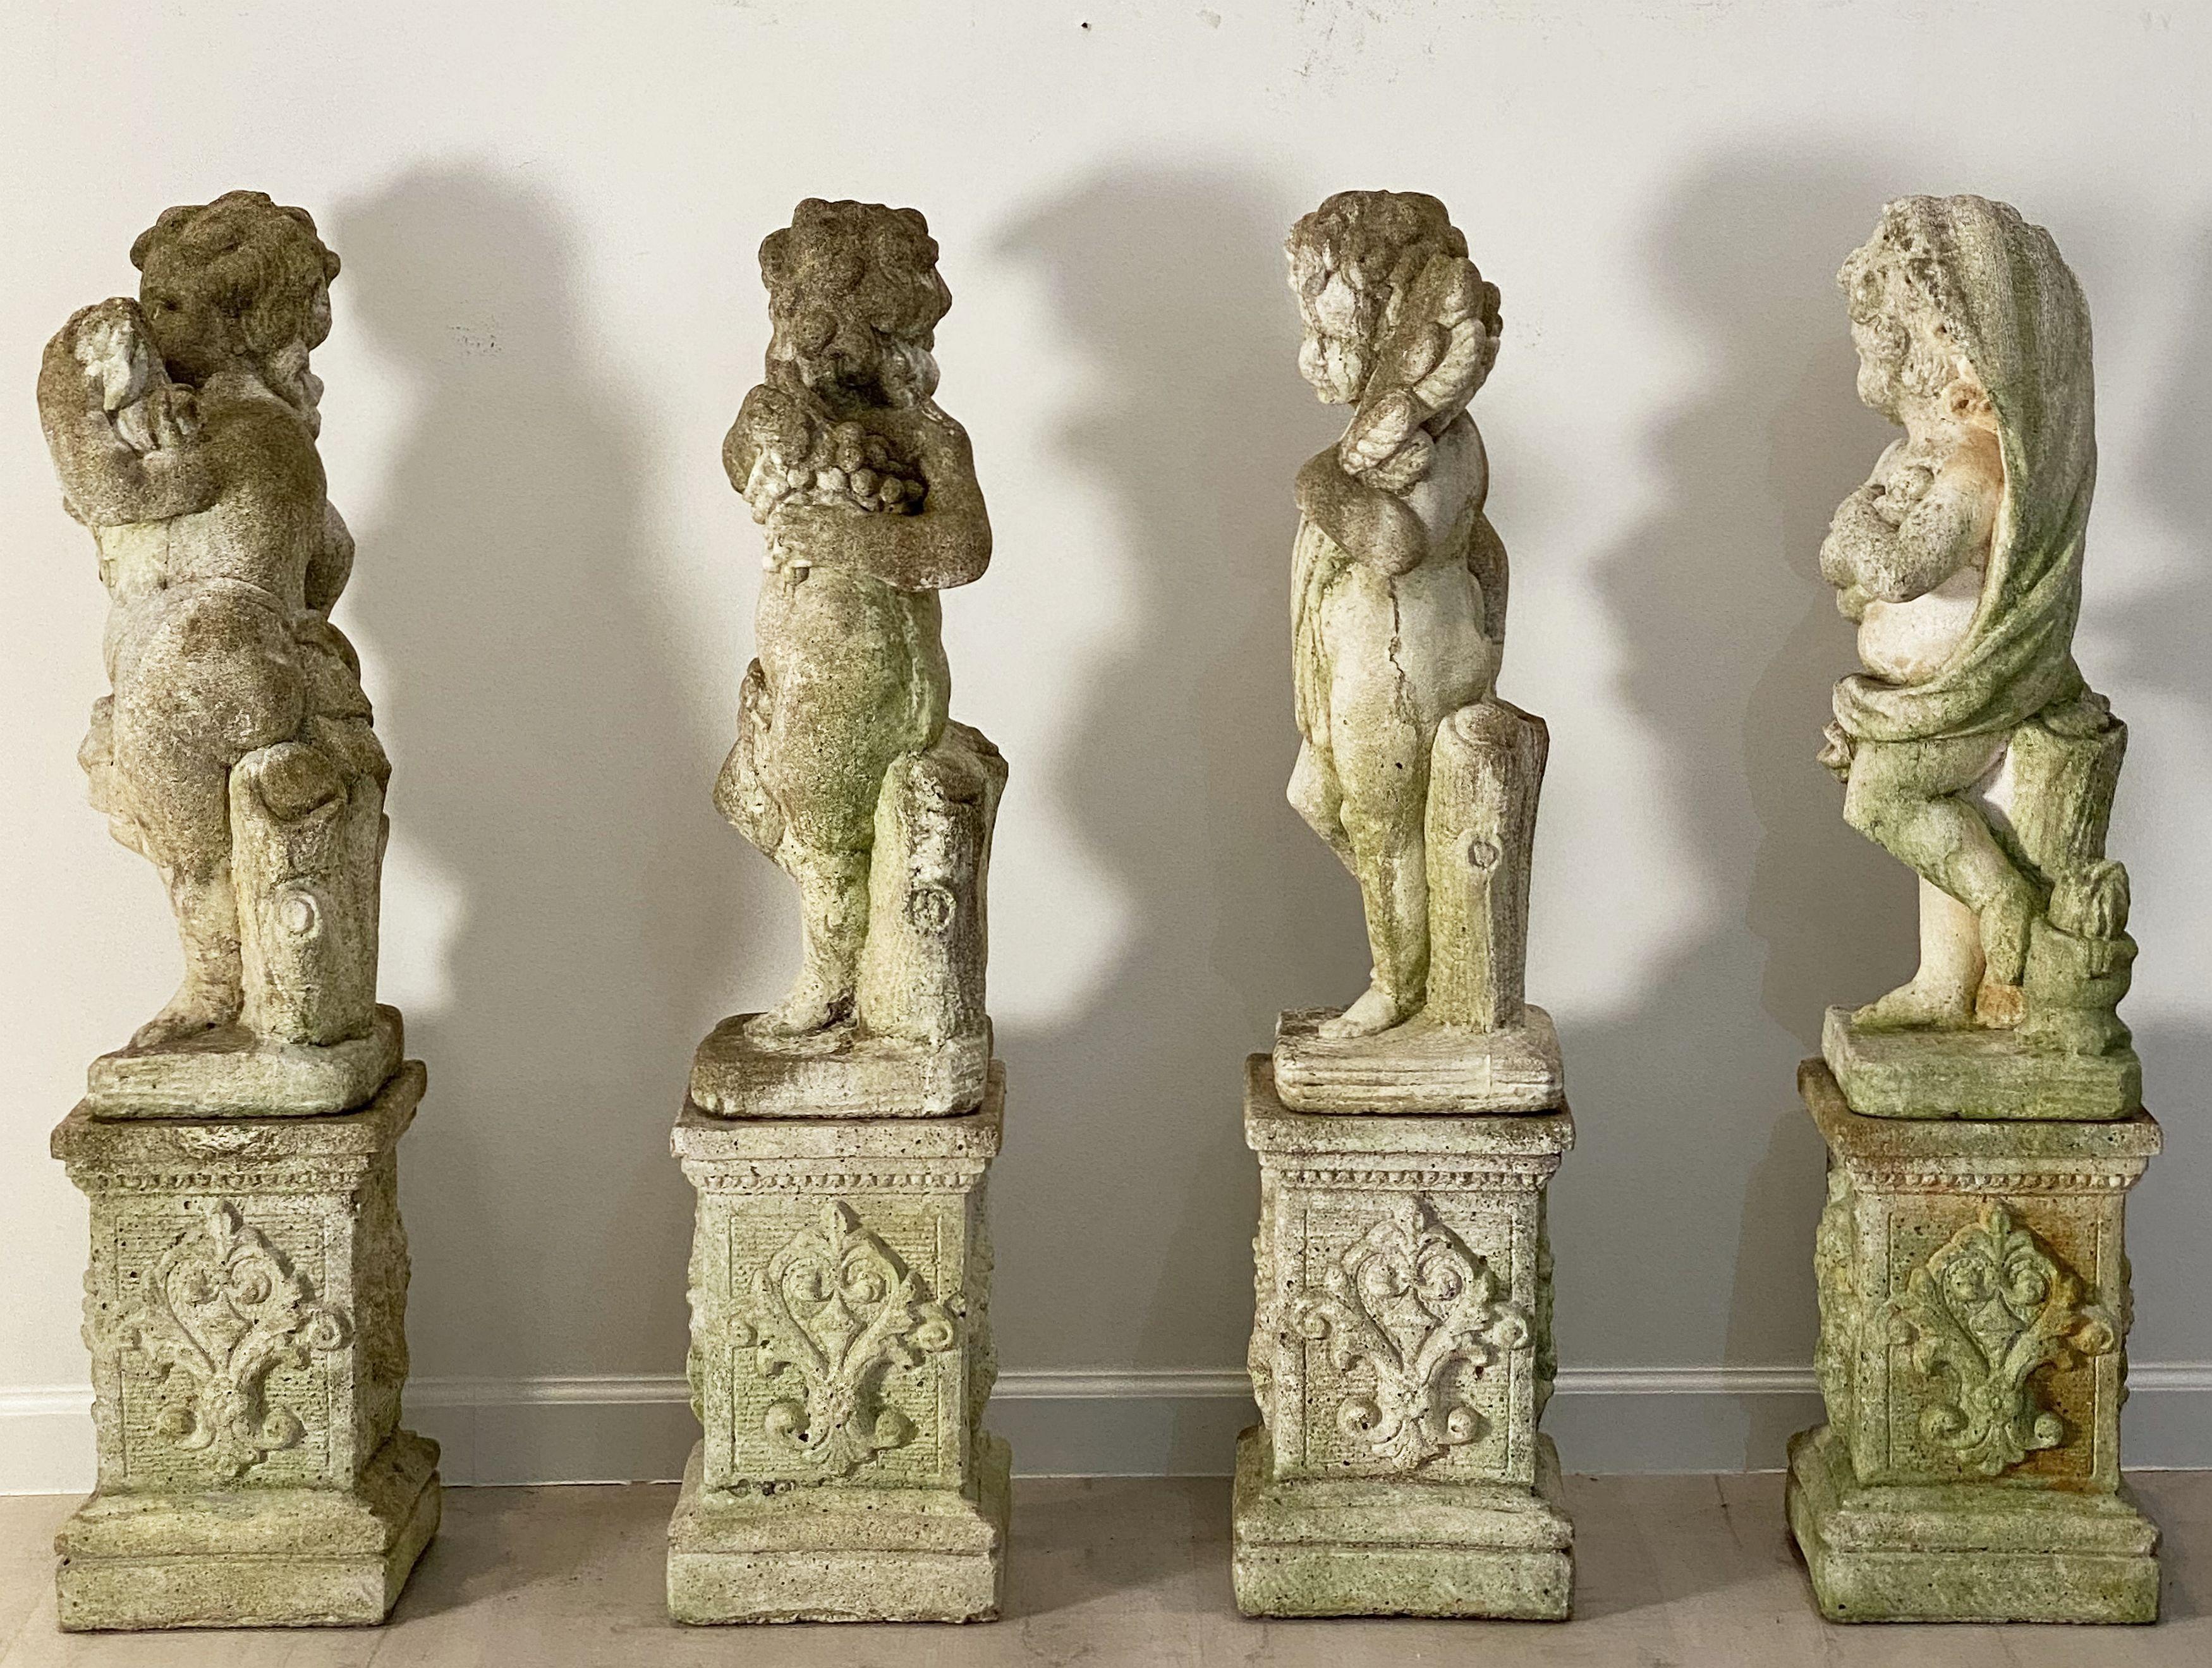 The Four Seasons Cherub Statues on Pedestals, Garden Stone Statuary 7